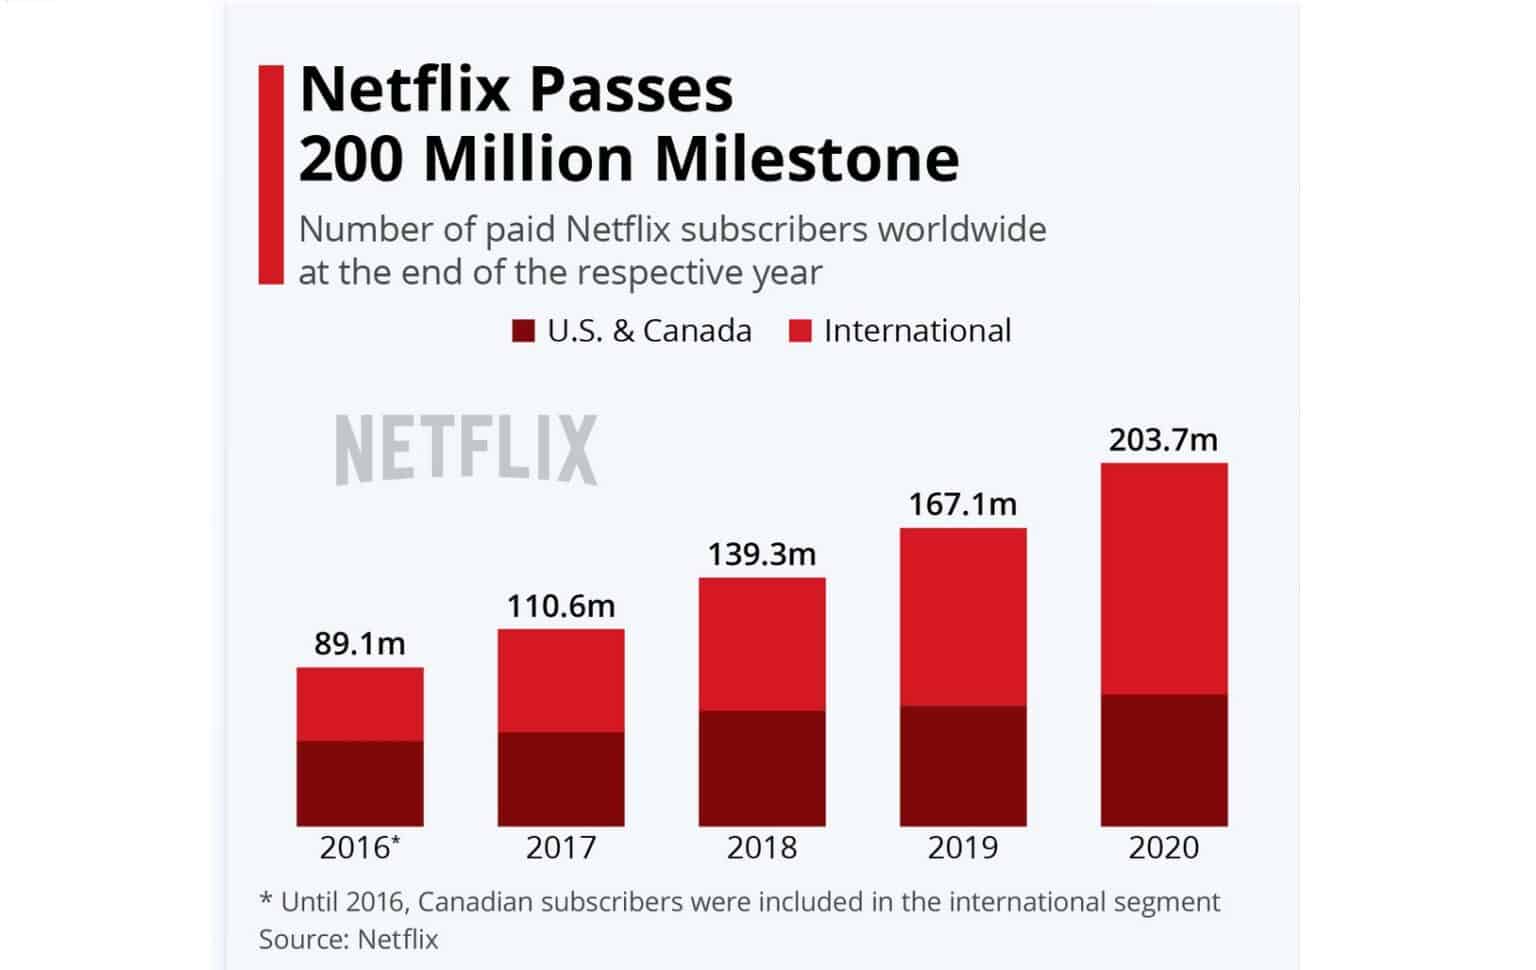 Netflix popularity